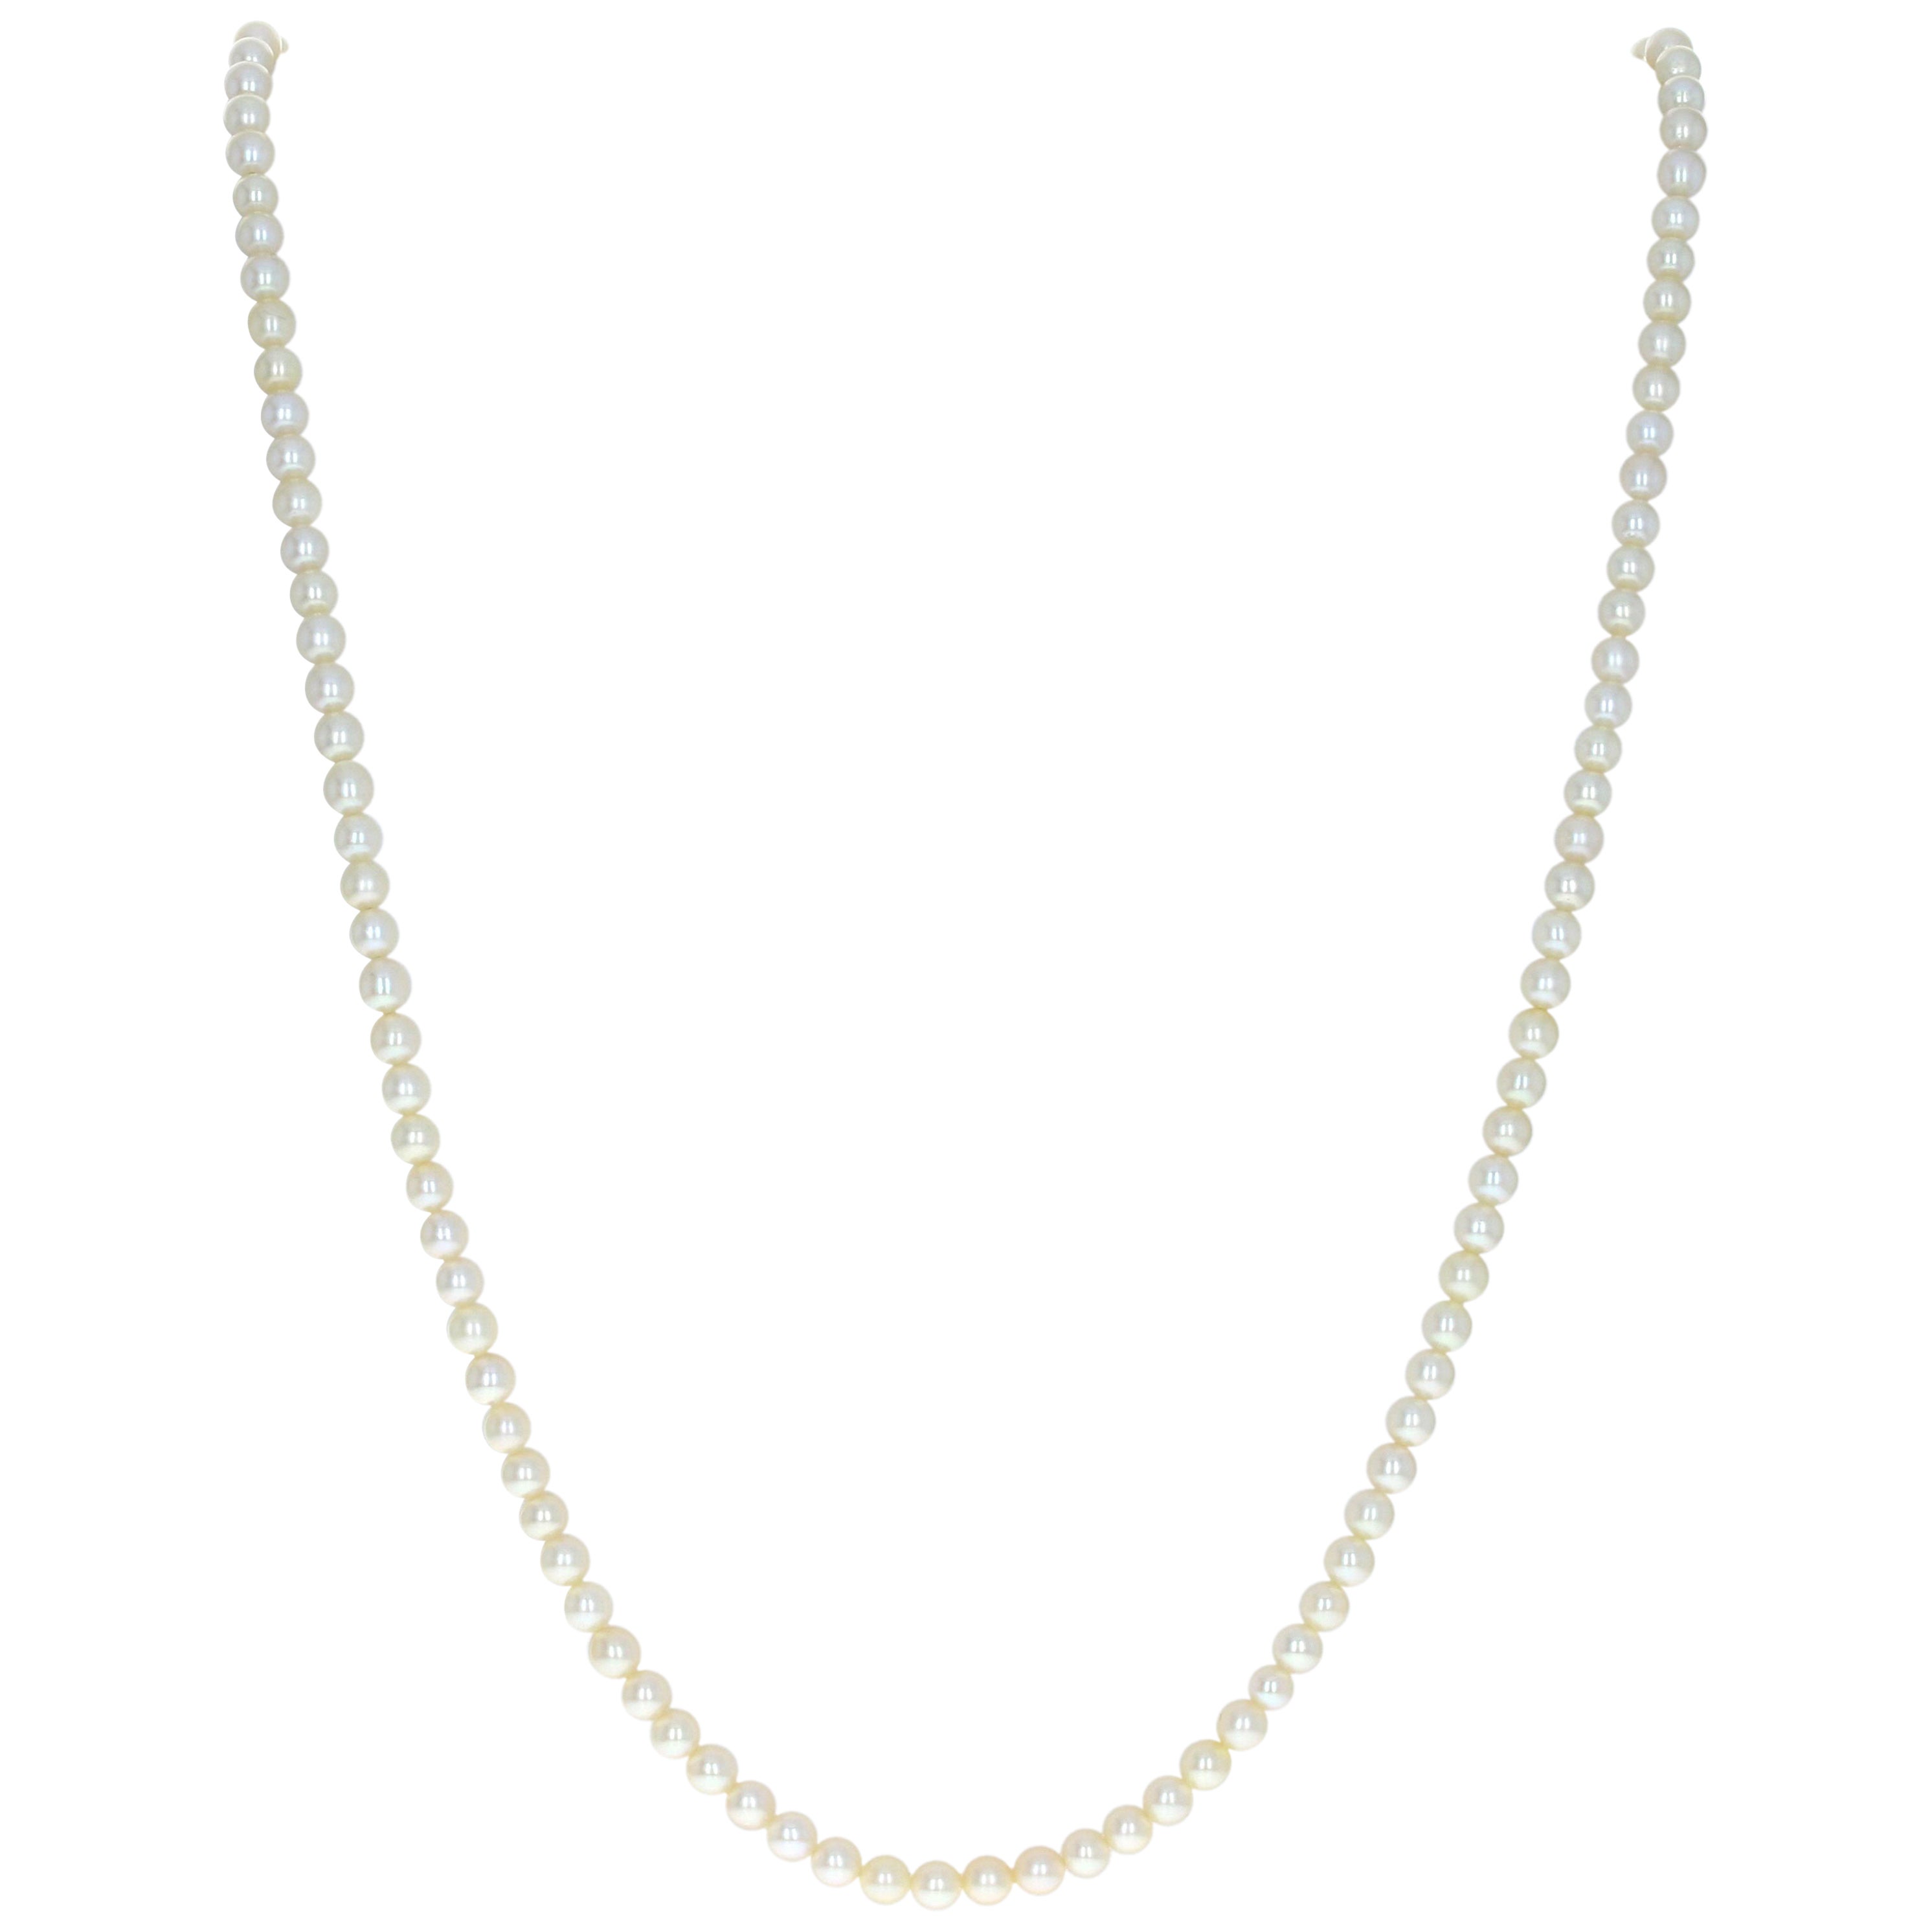 Collier de perles de culture en or blanc, fermoir crochet de poisson 8 carats